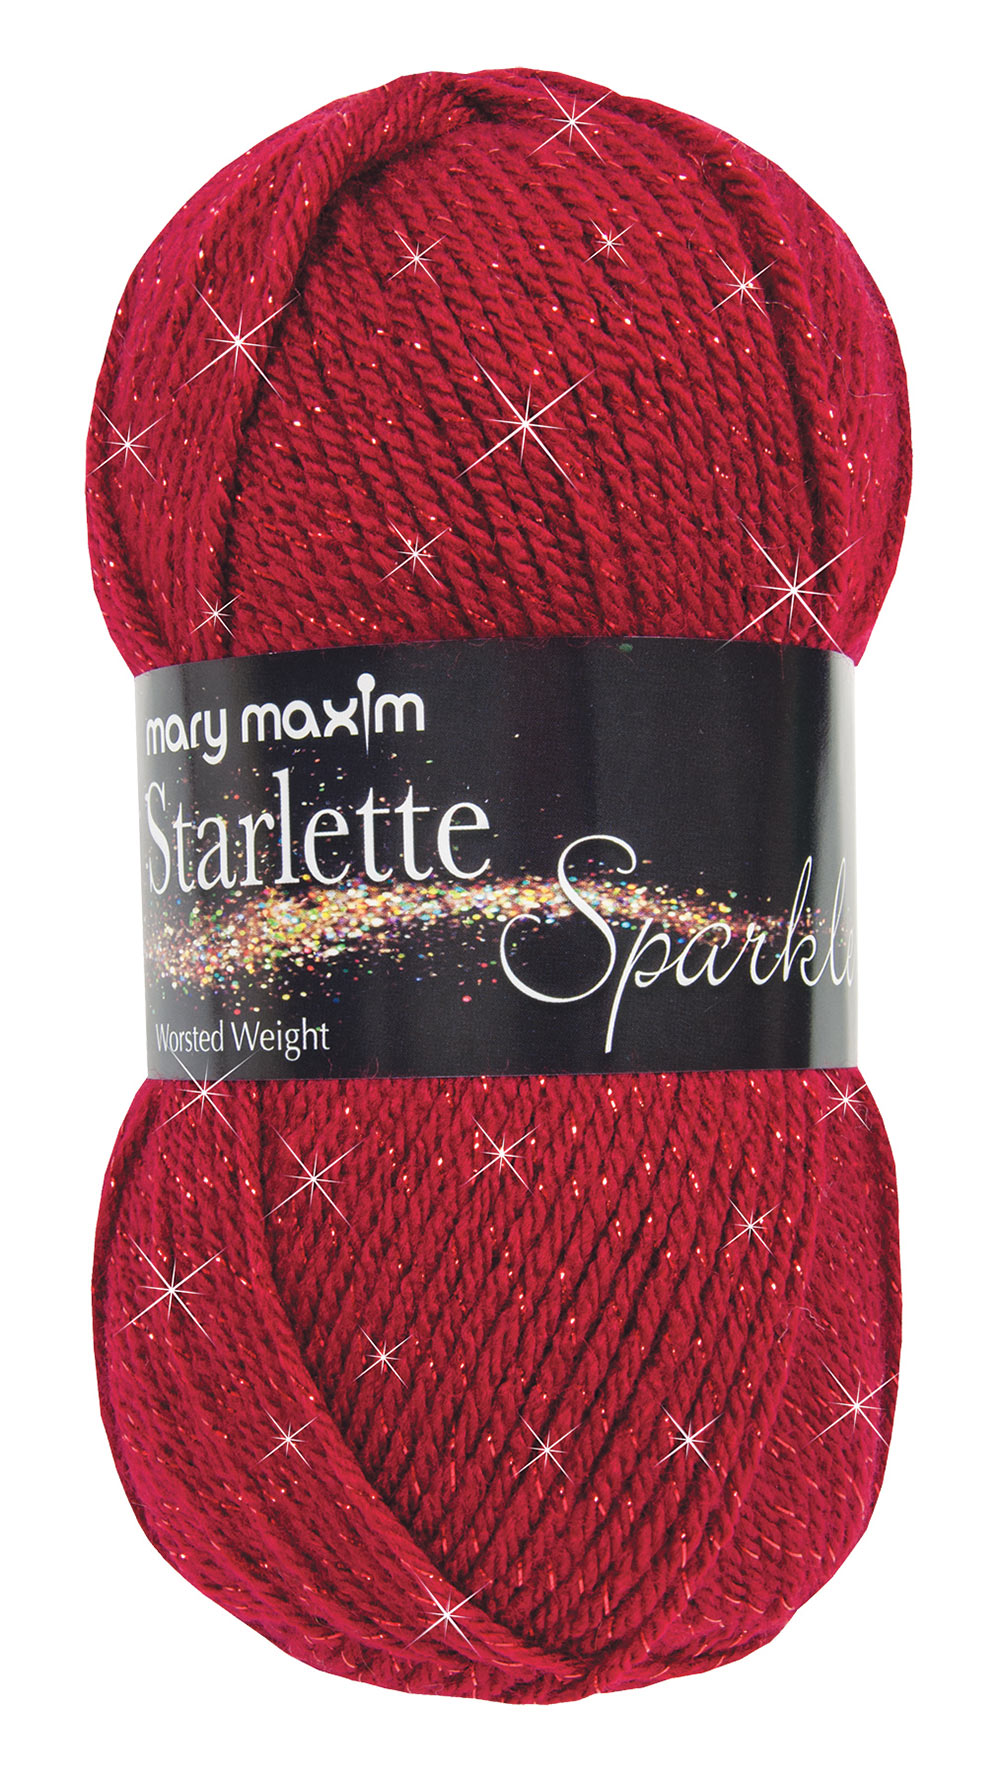 Mary Maxim Starlette Sparkle